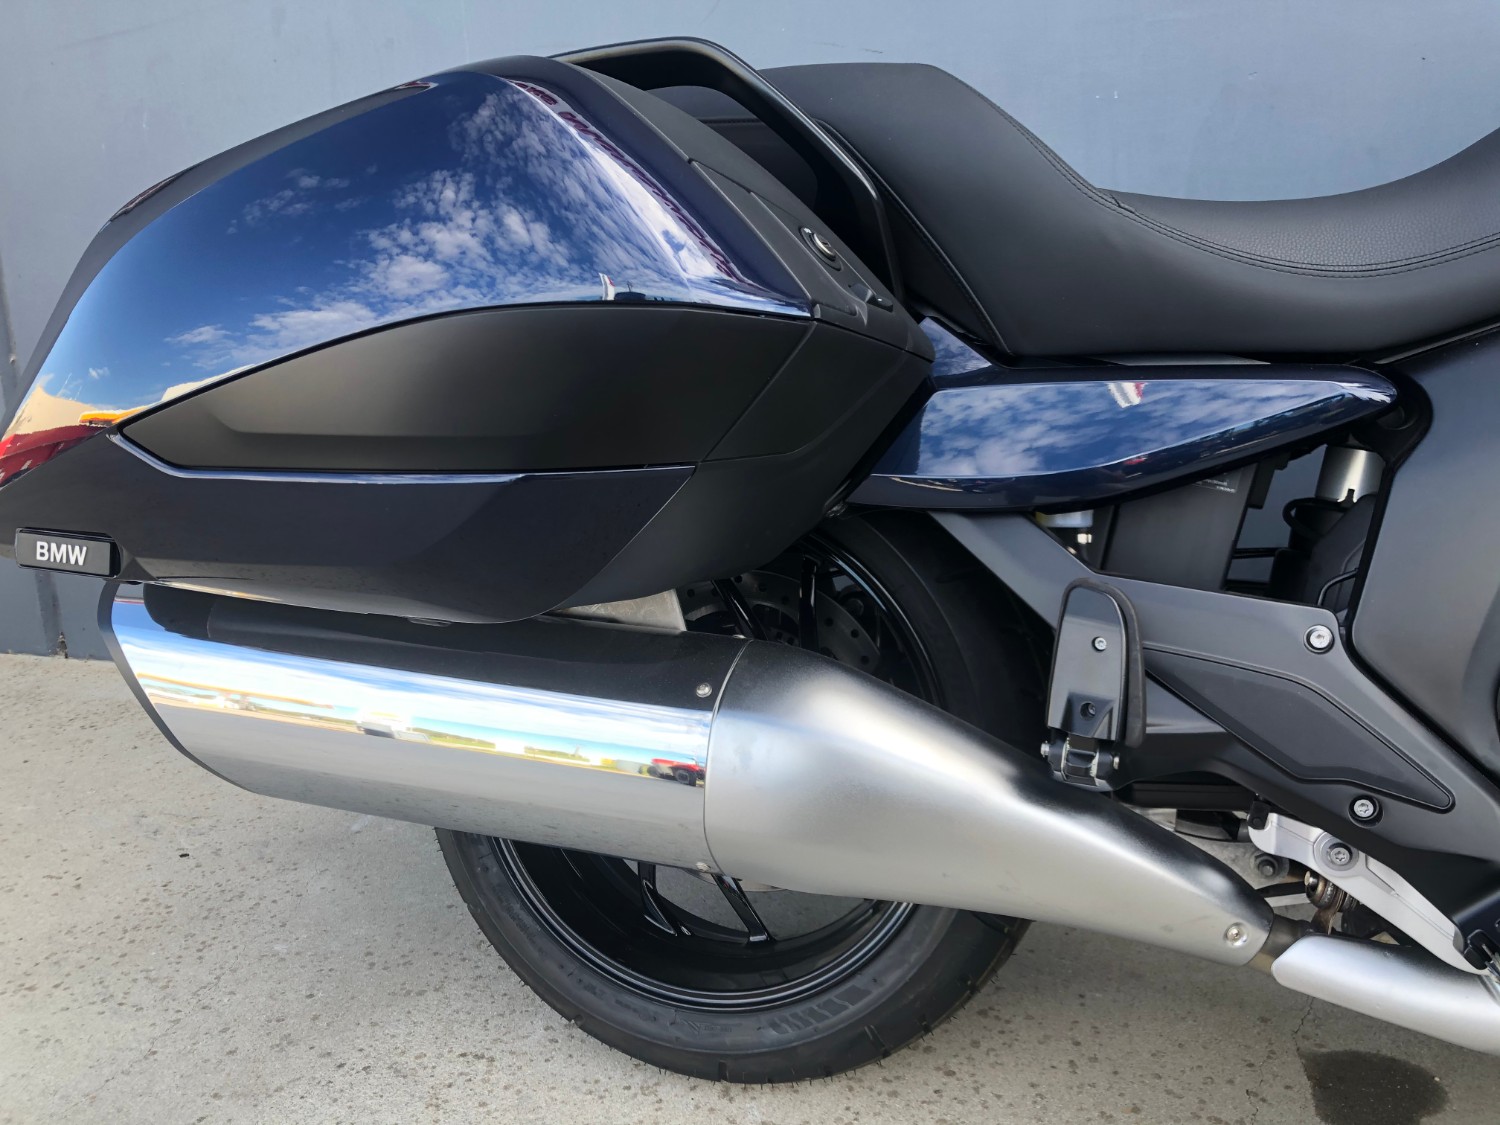 2019 BMW K1600 B Deluxe Motorcycle Image 21